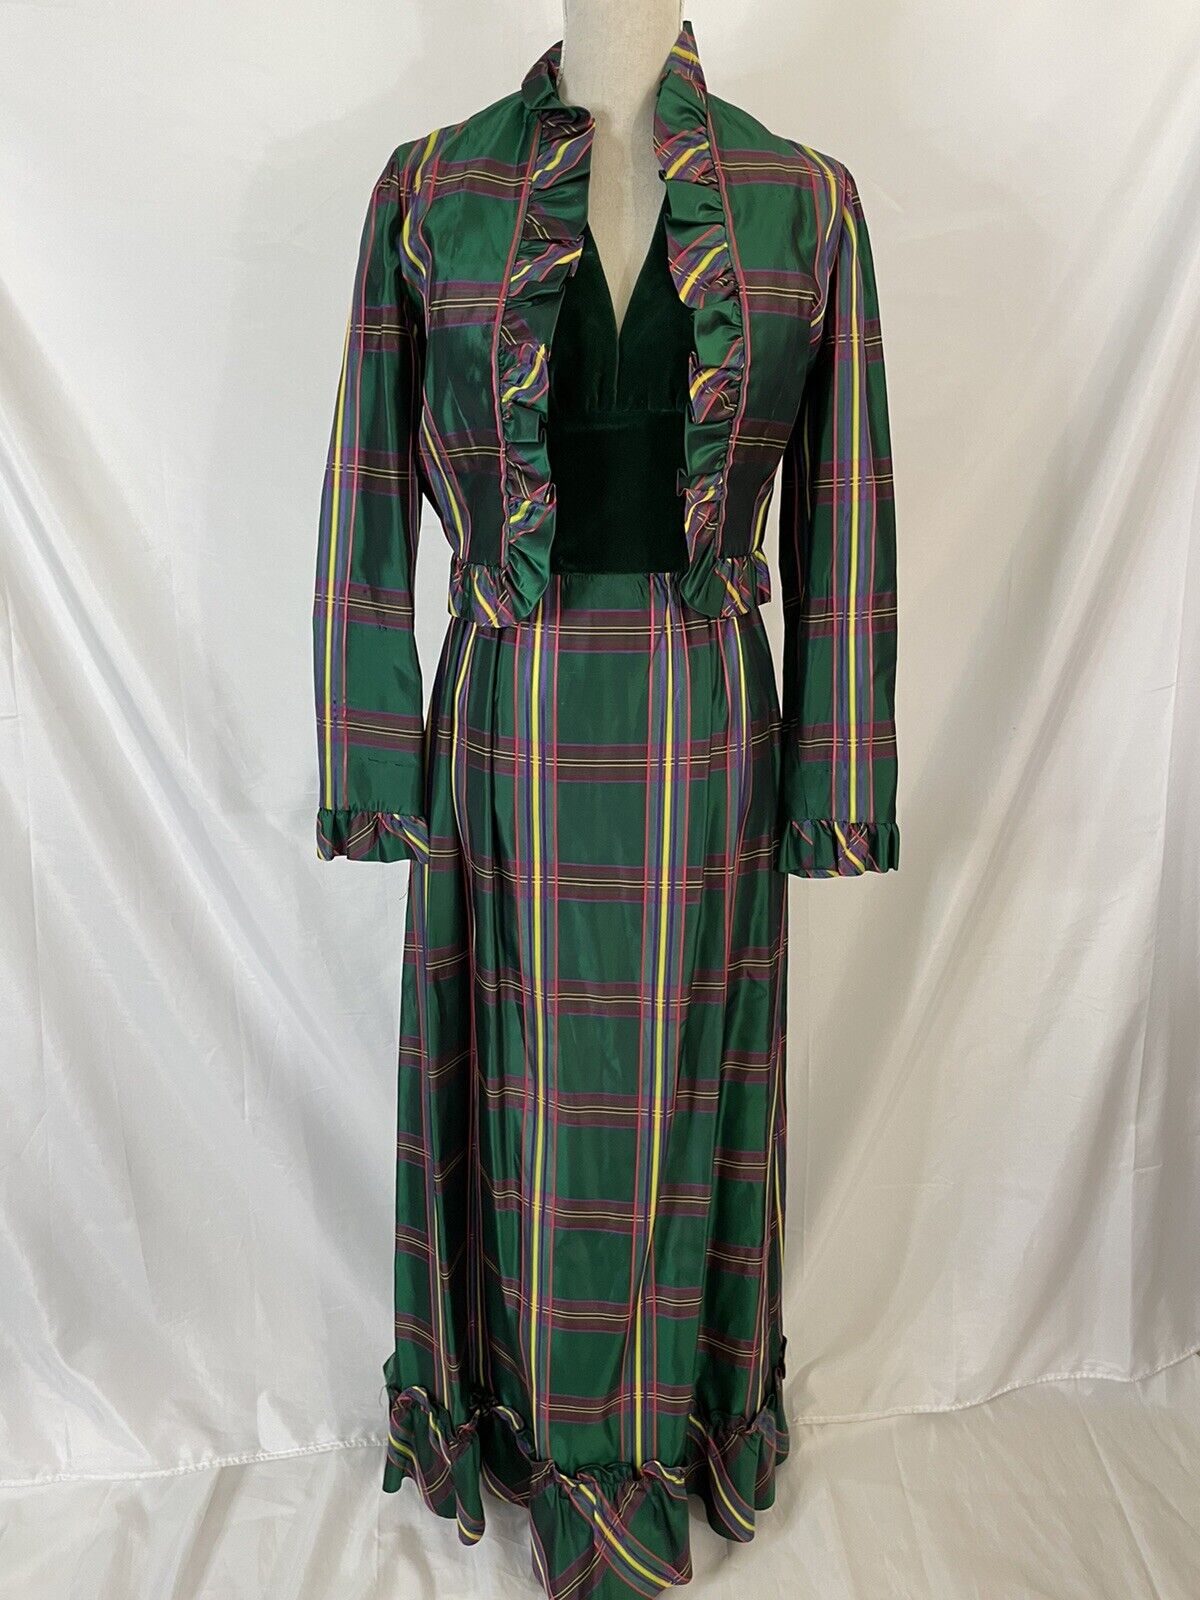 Corinth Street Maxi Dress Tartan Plaid w/ Jacket Halter 10 Vintage Green